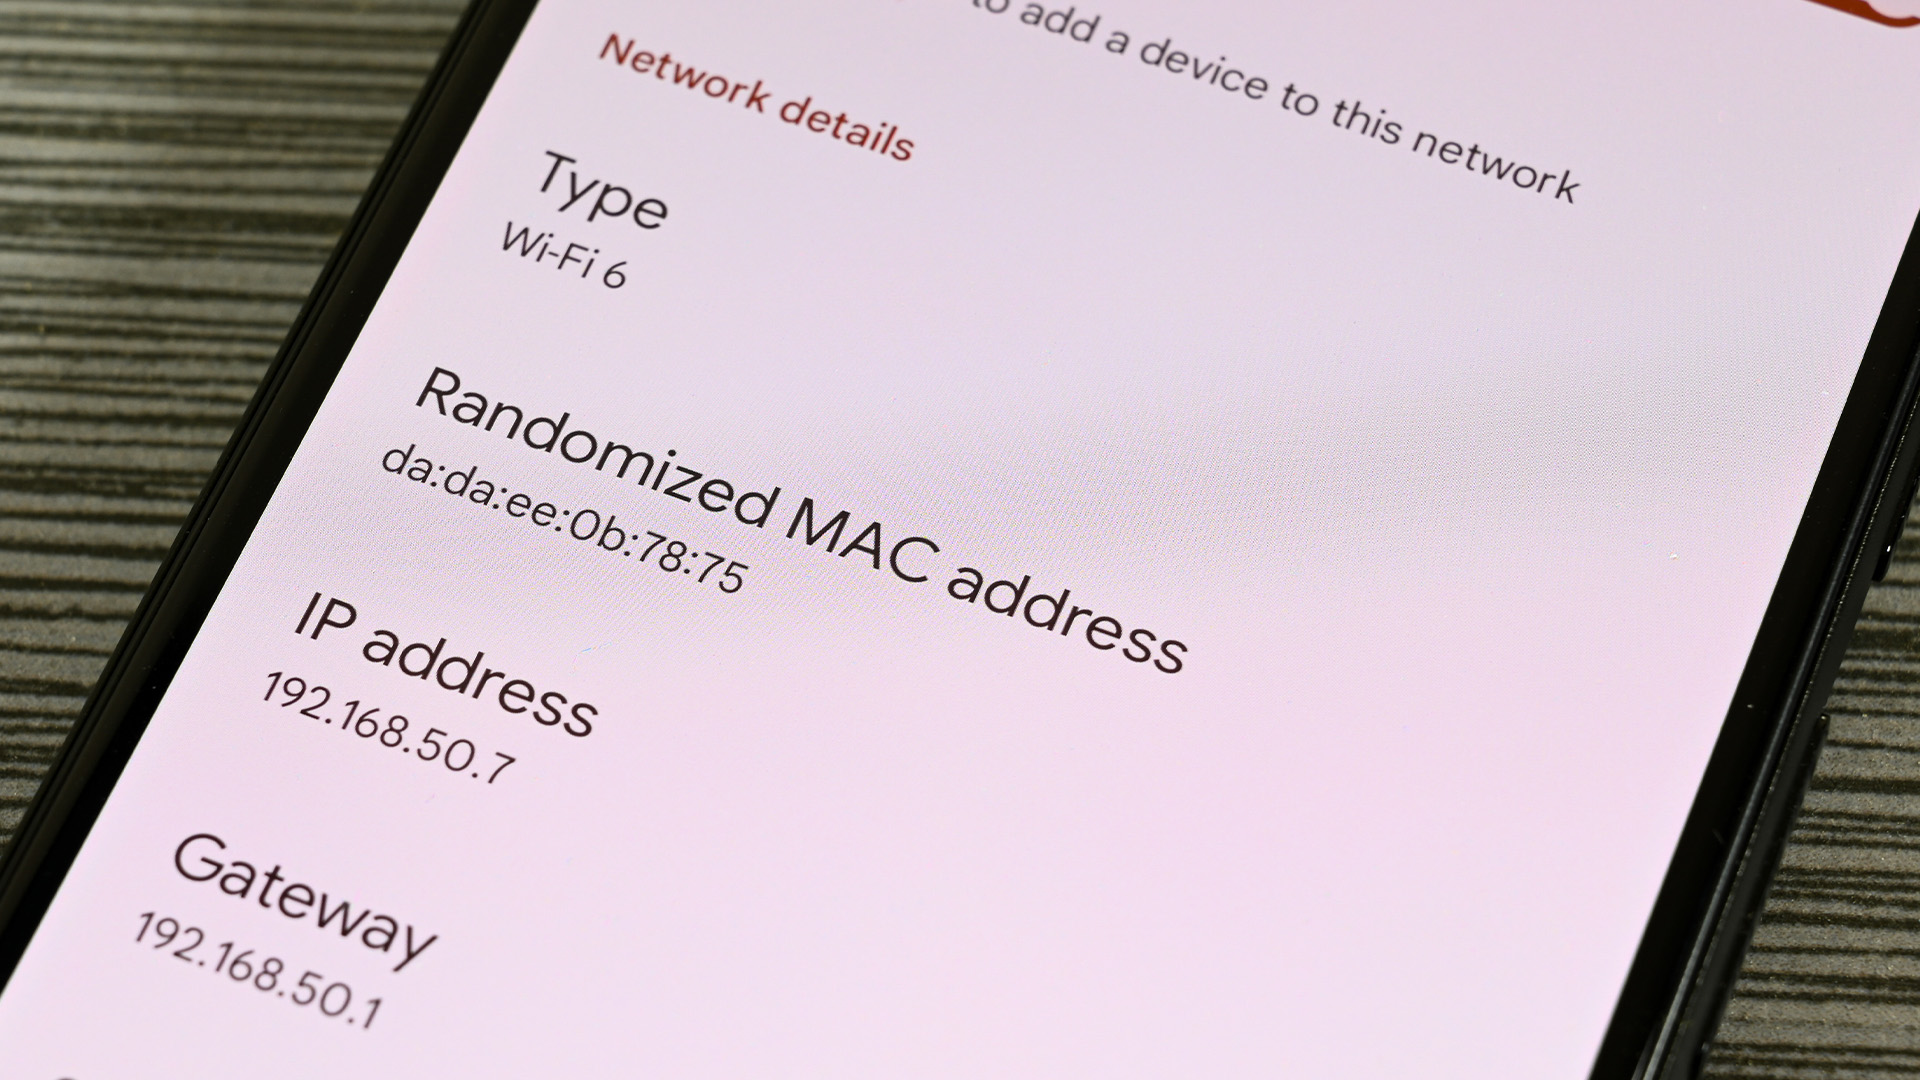 Randomized MAC address